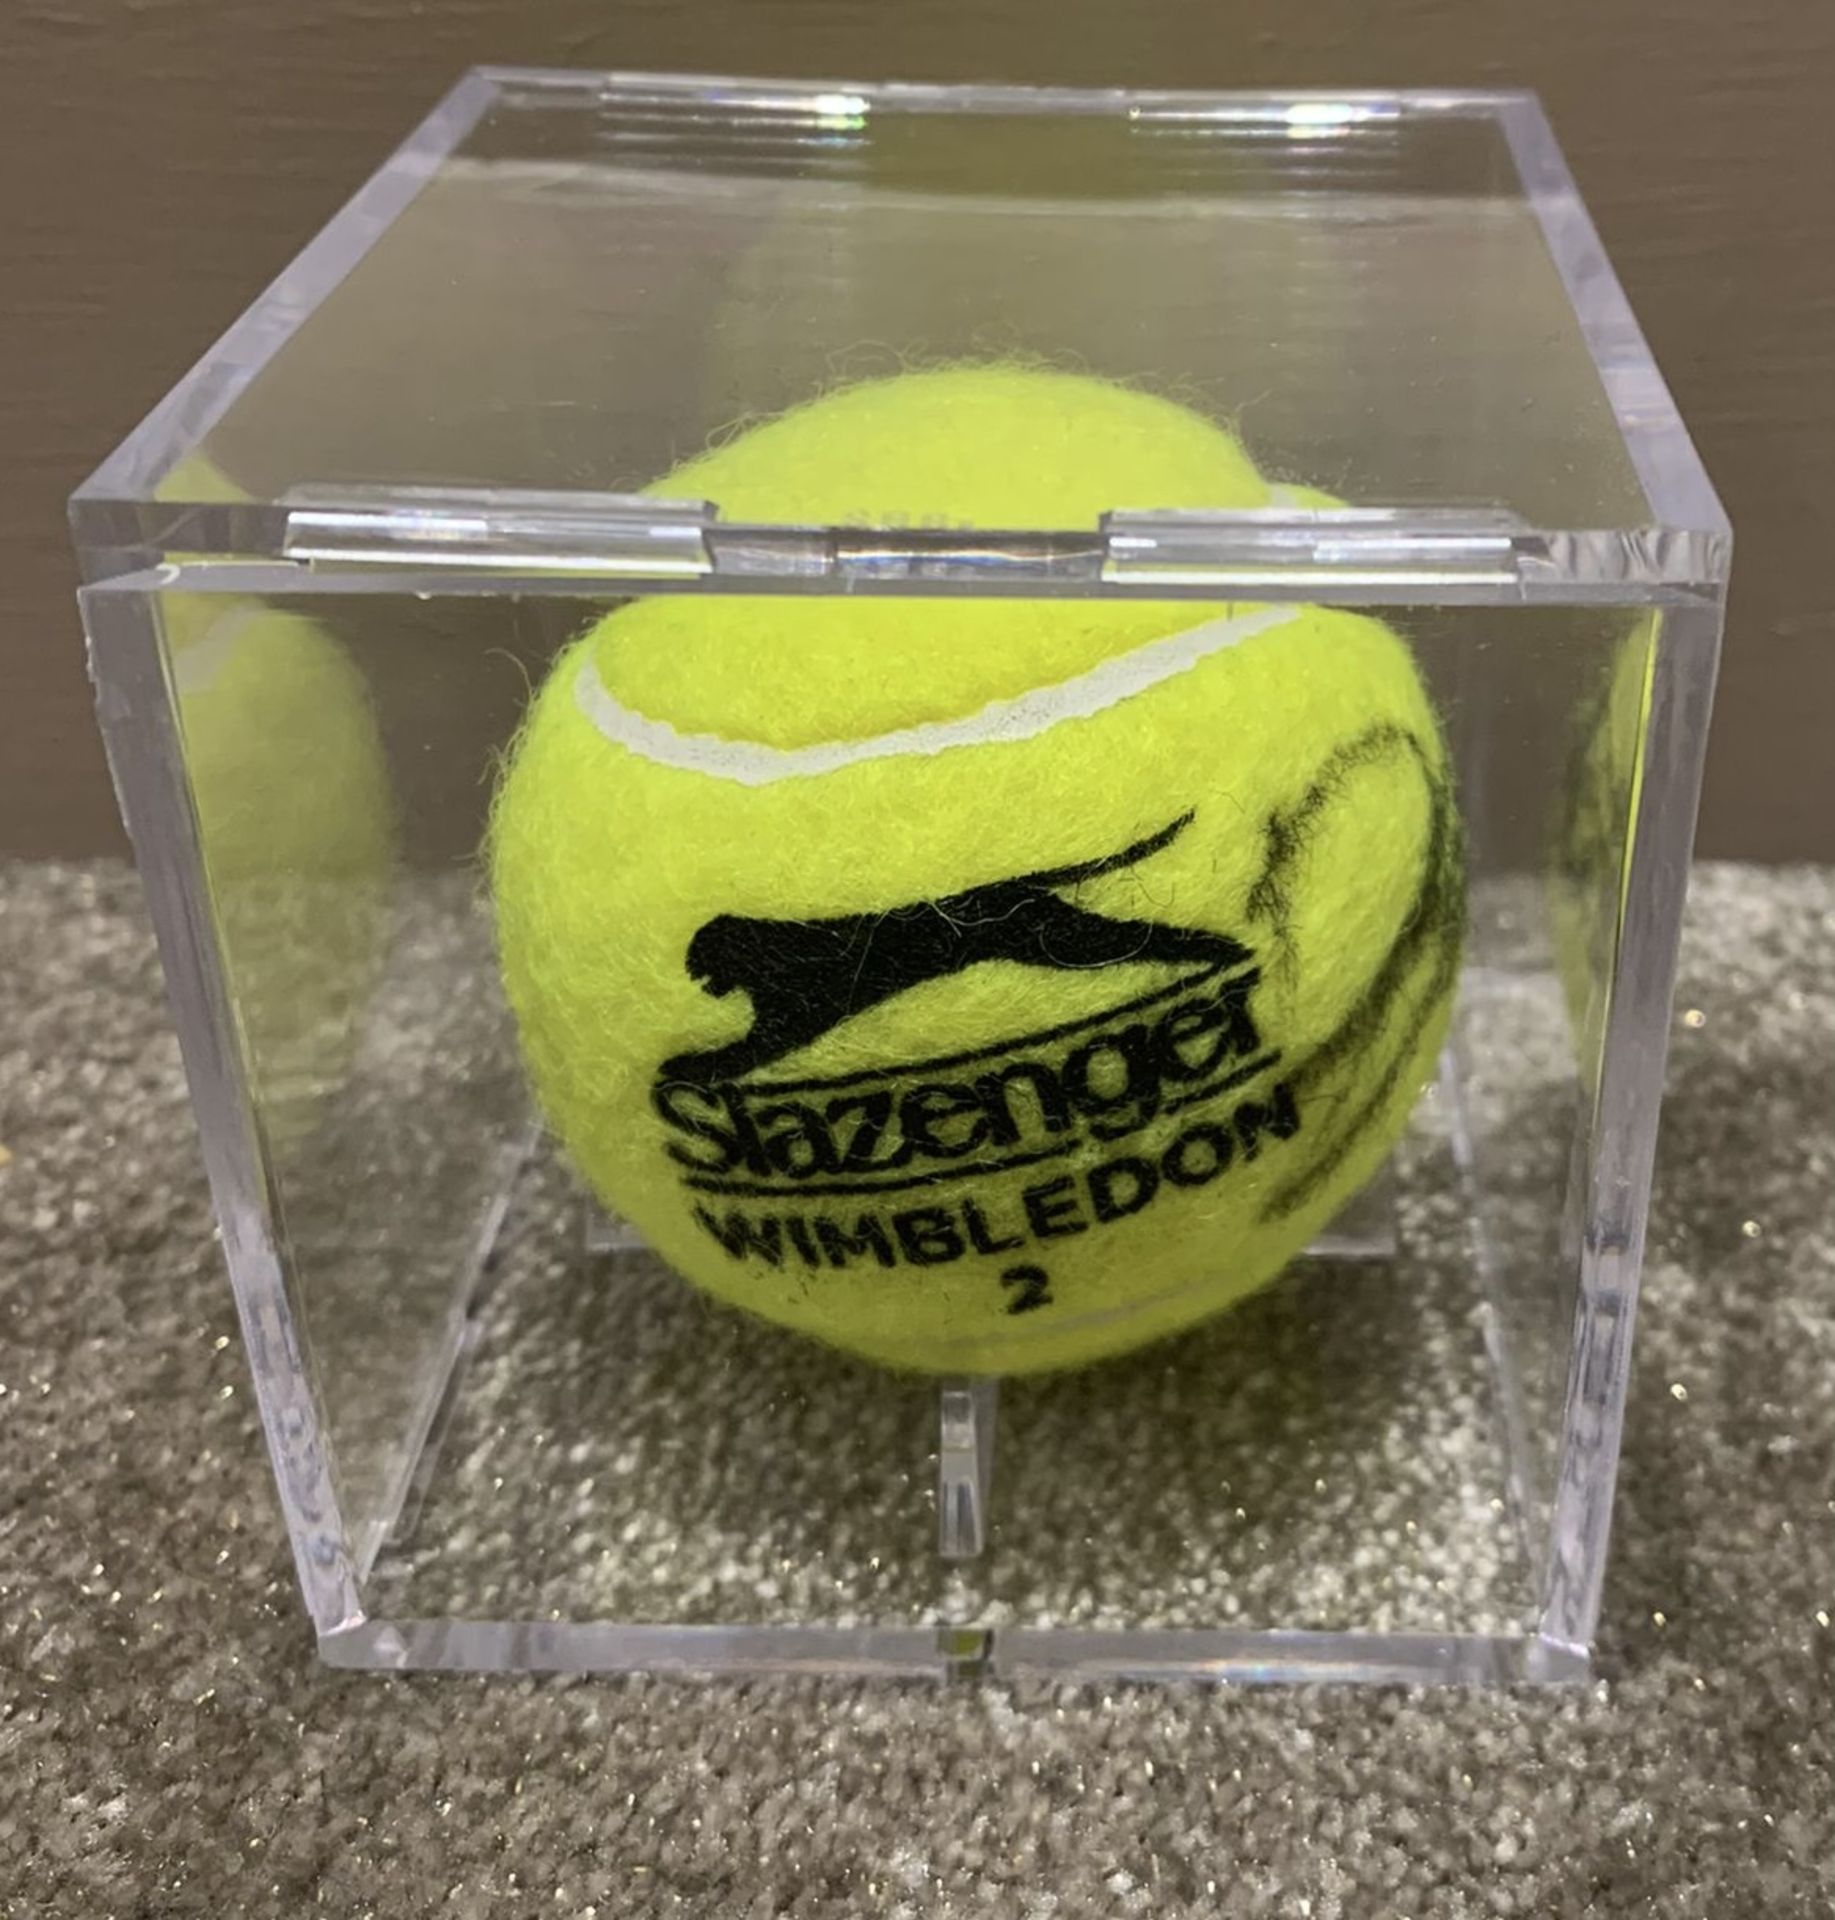 Emma Raducanu Signed Tennis Ball In Display Case - Image 3 of 5